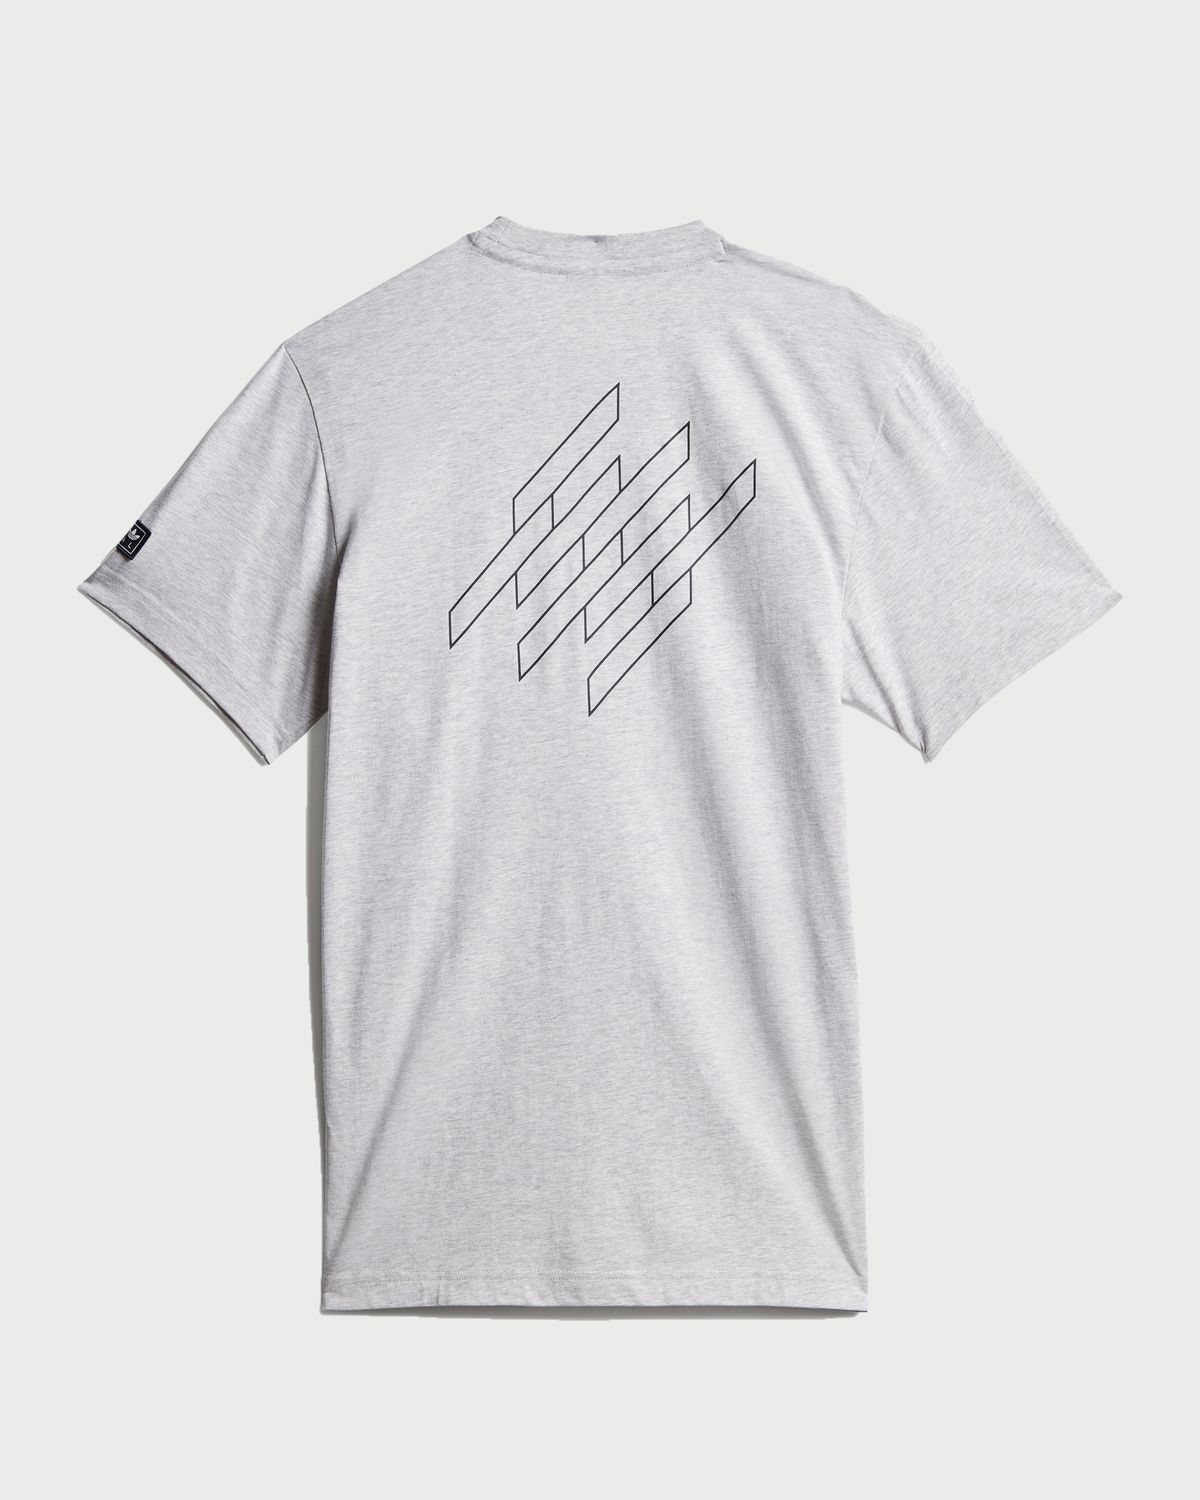 Adidas – Tee Spezial x New Order Grey - T-shirts - Grey - Image 2